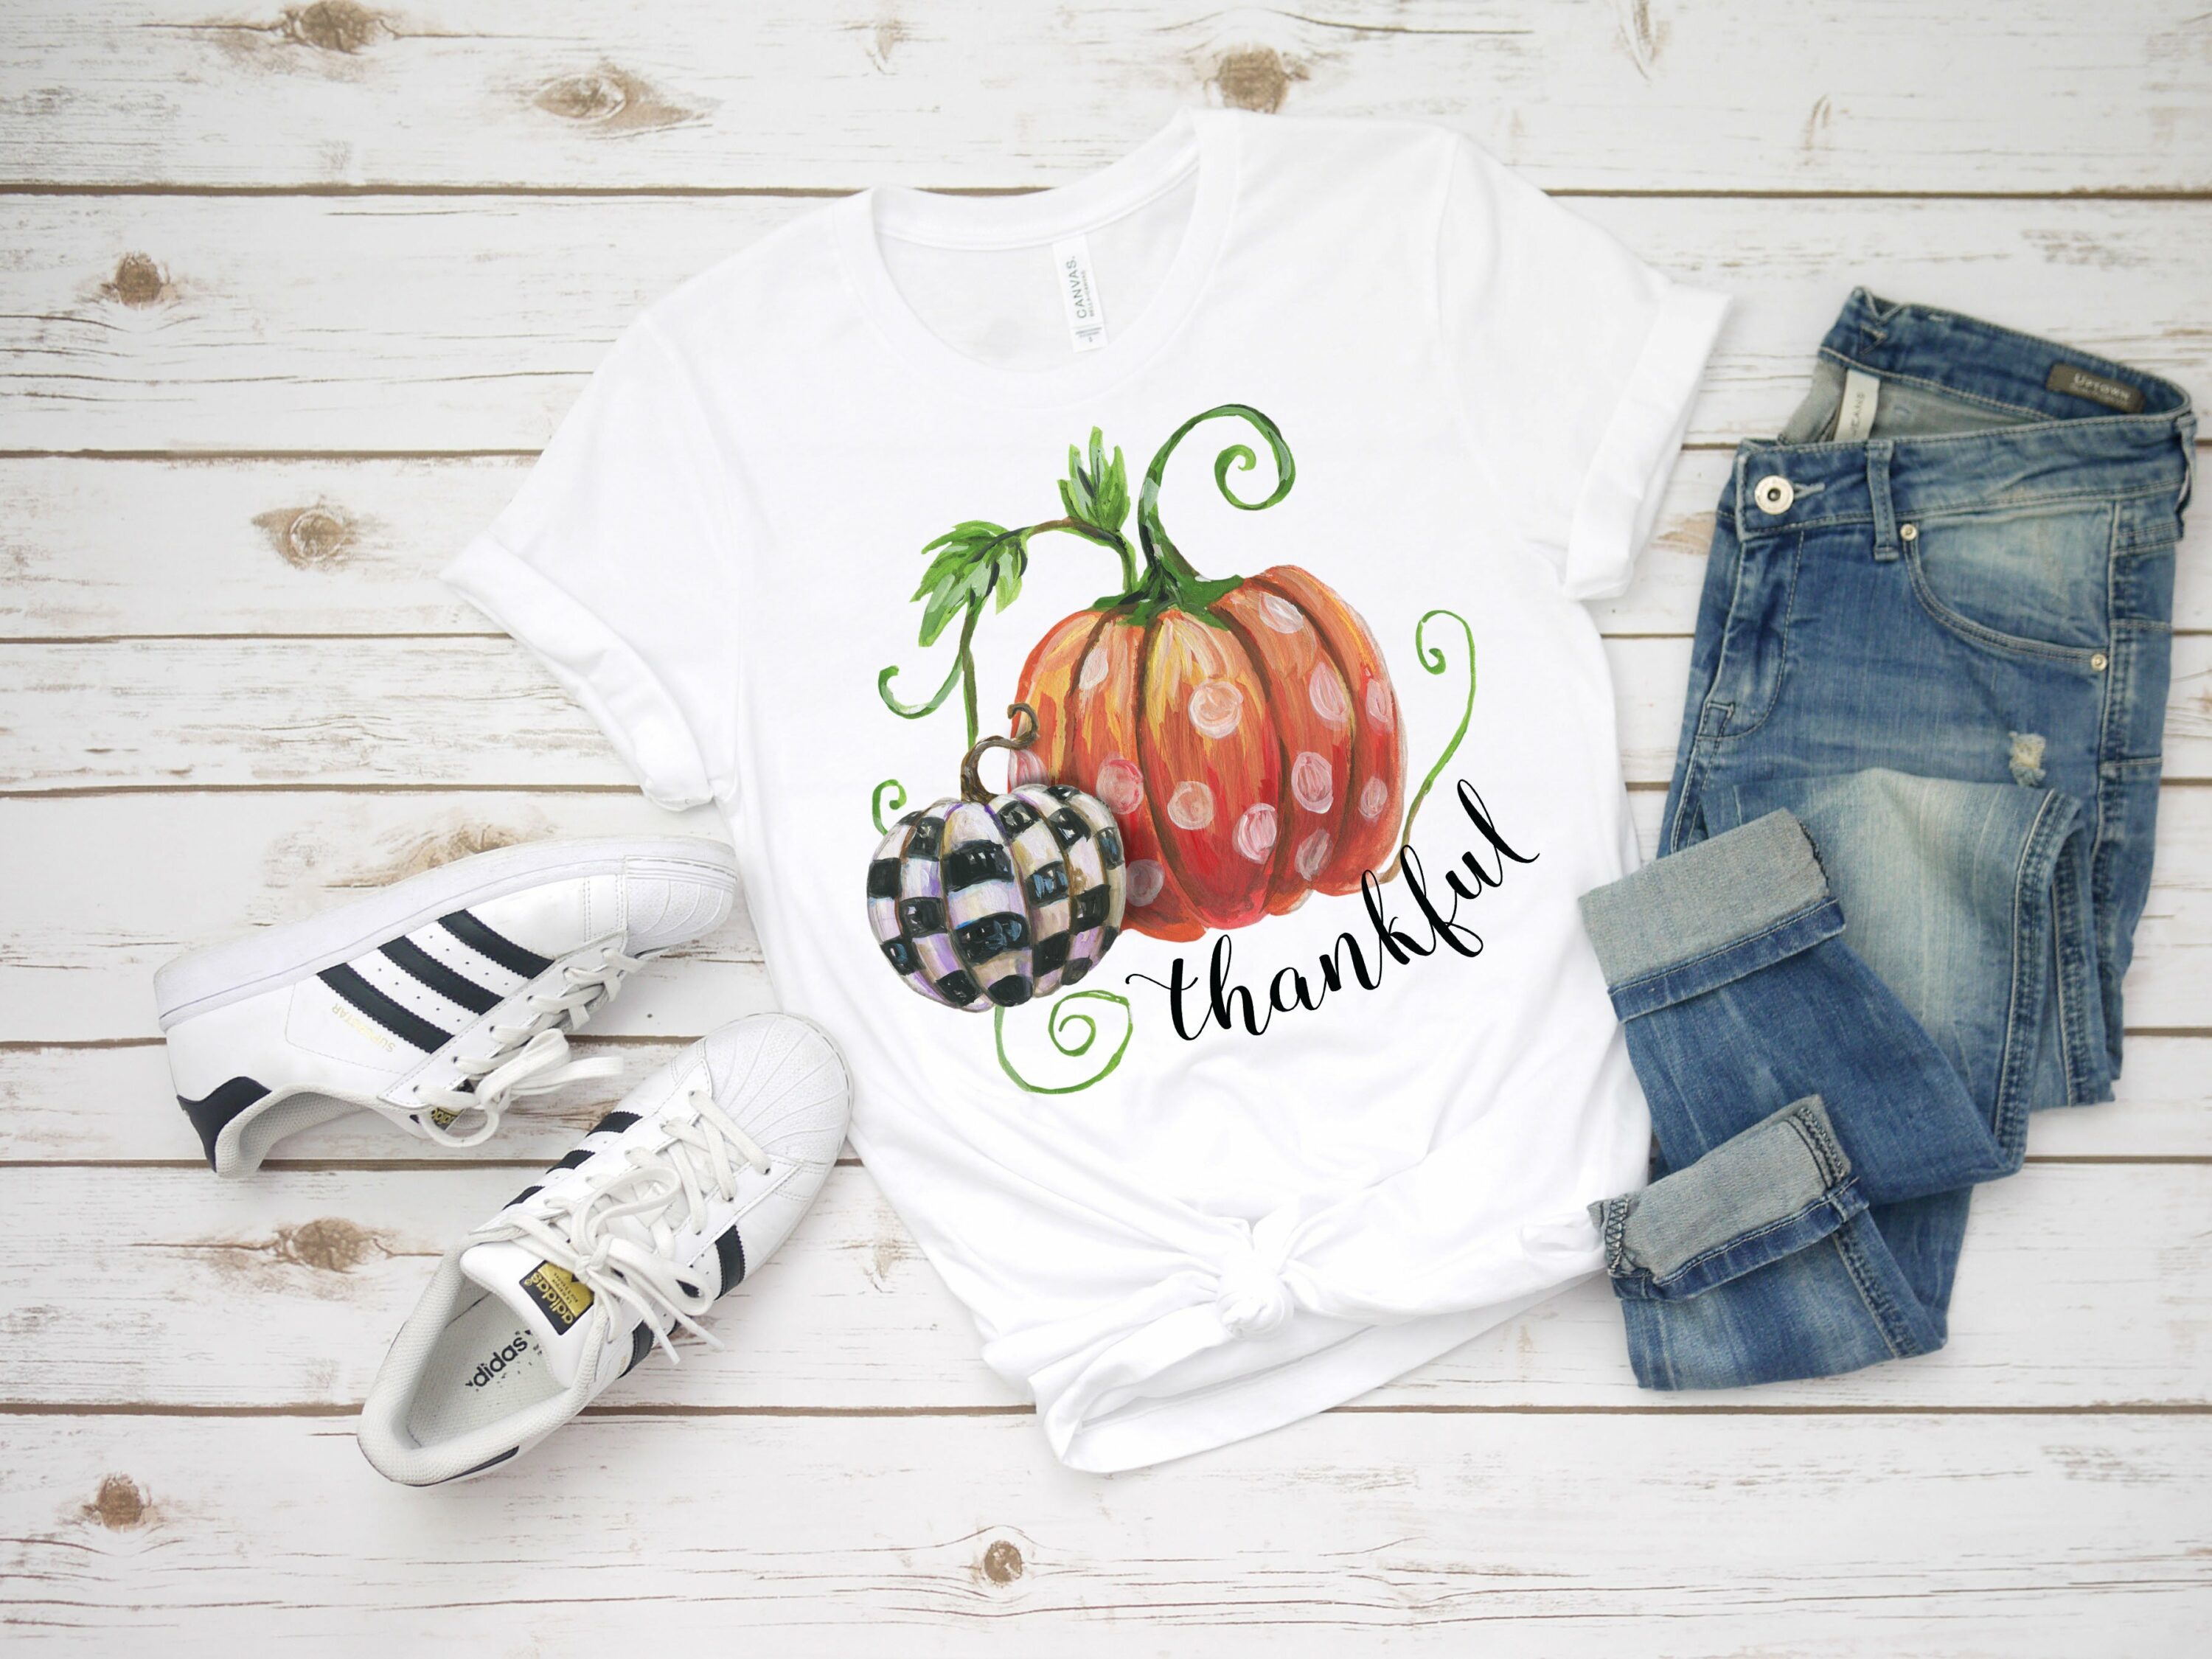 Classic white t-shirt with a pumpkin.